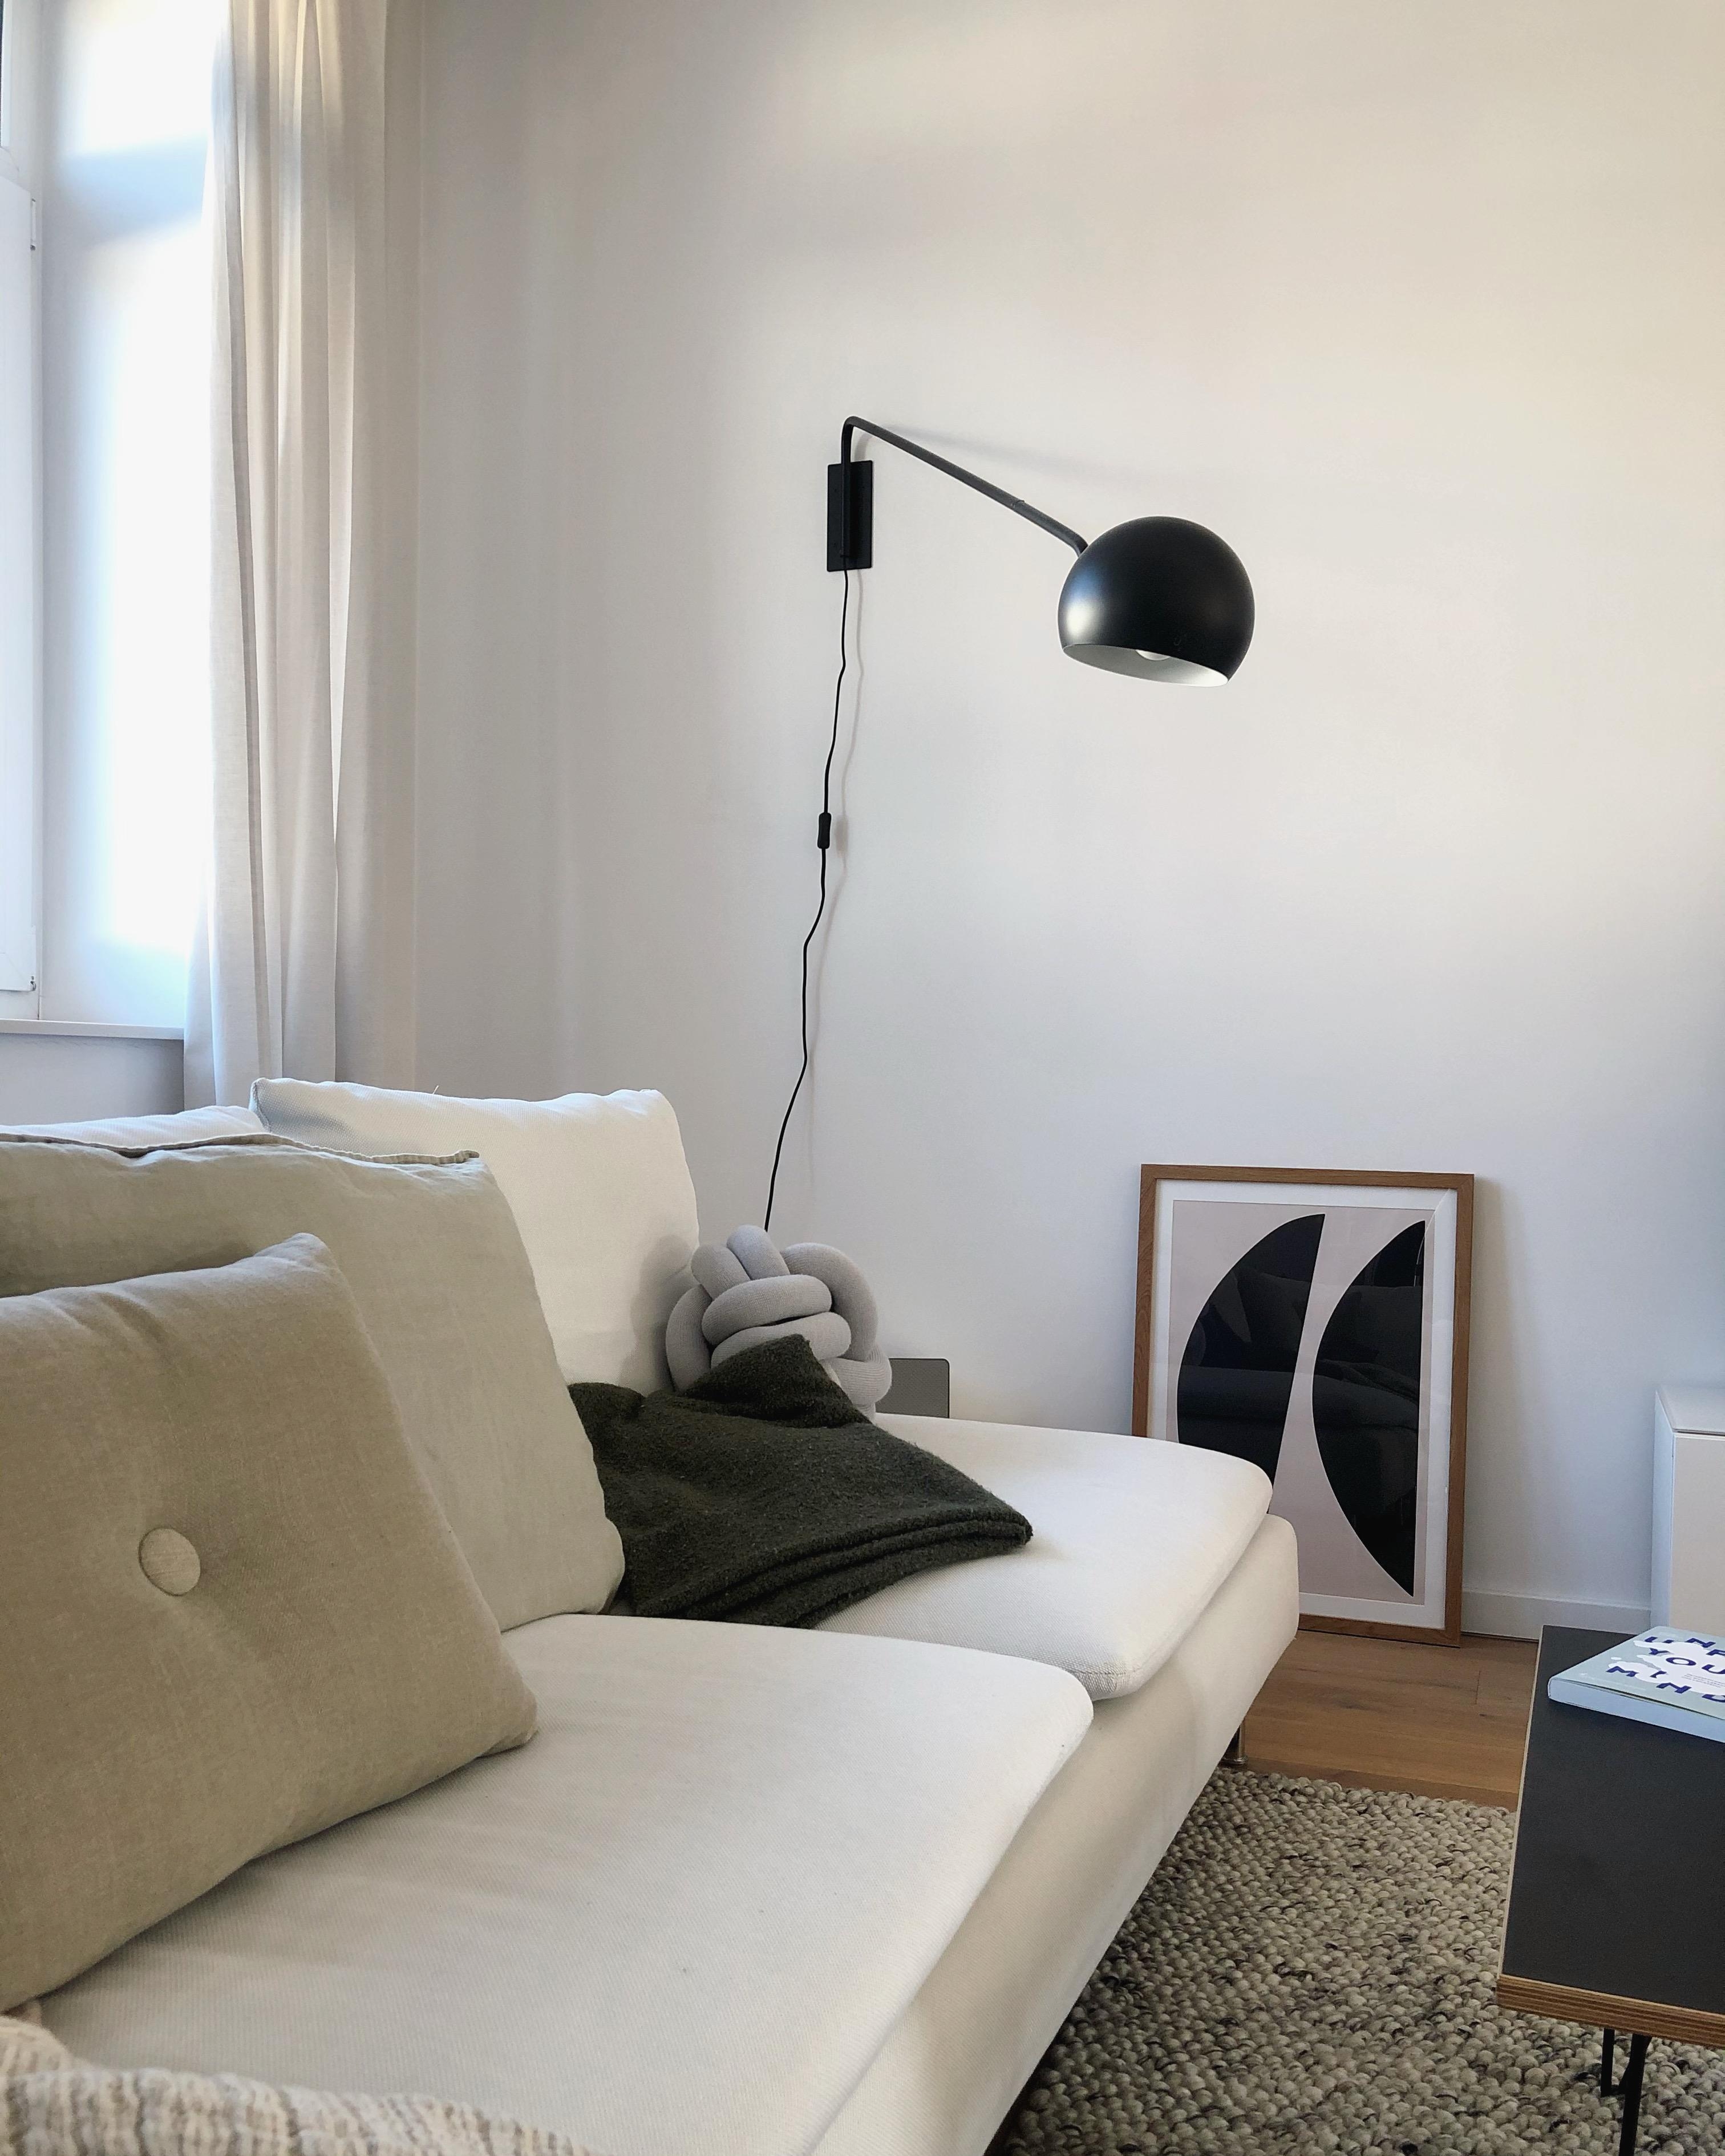 #nordichome #wohnzimmer #livingroom #wanddeko #dekoidee #hygge #skandi #interior #home #couch #couchstyle #print